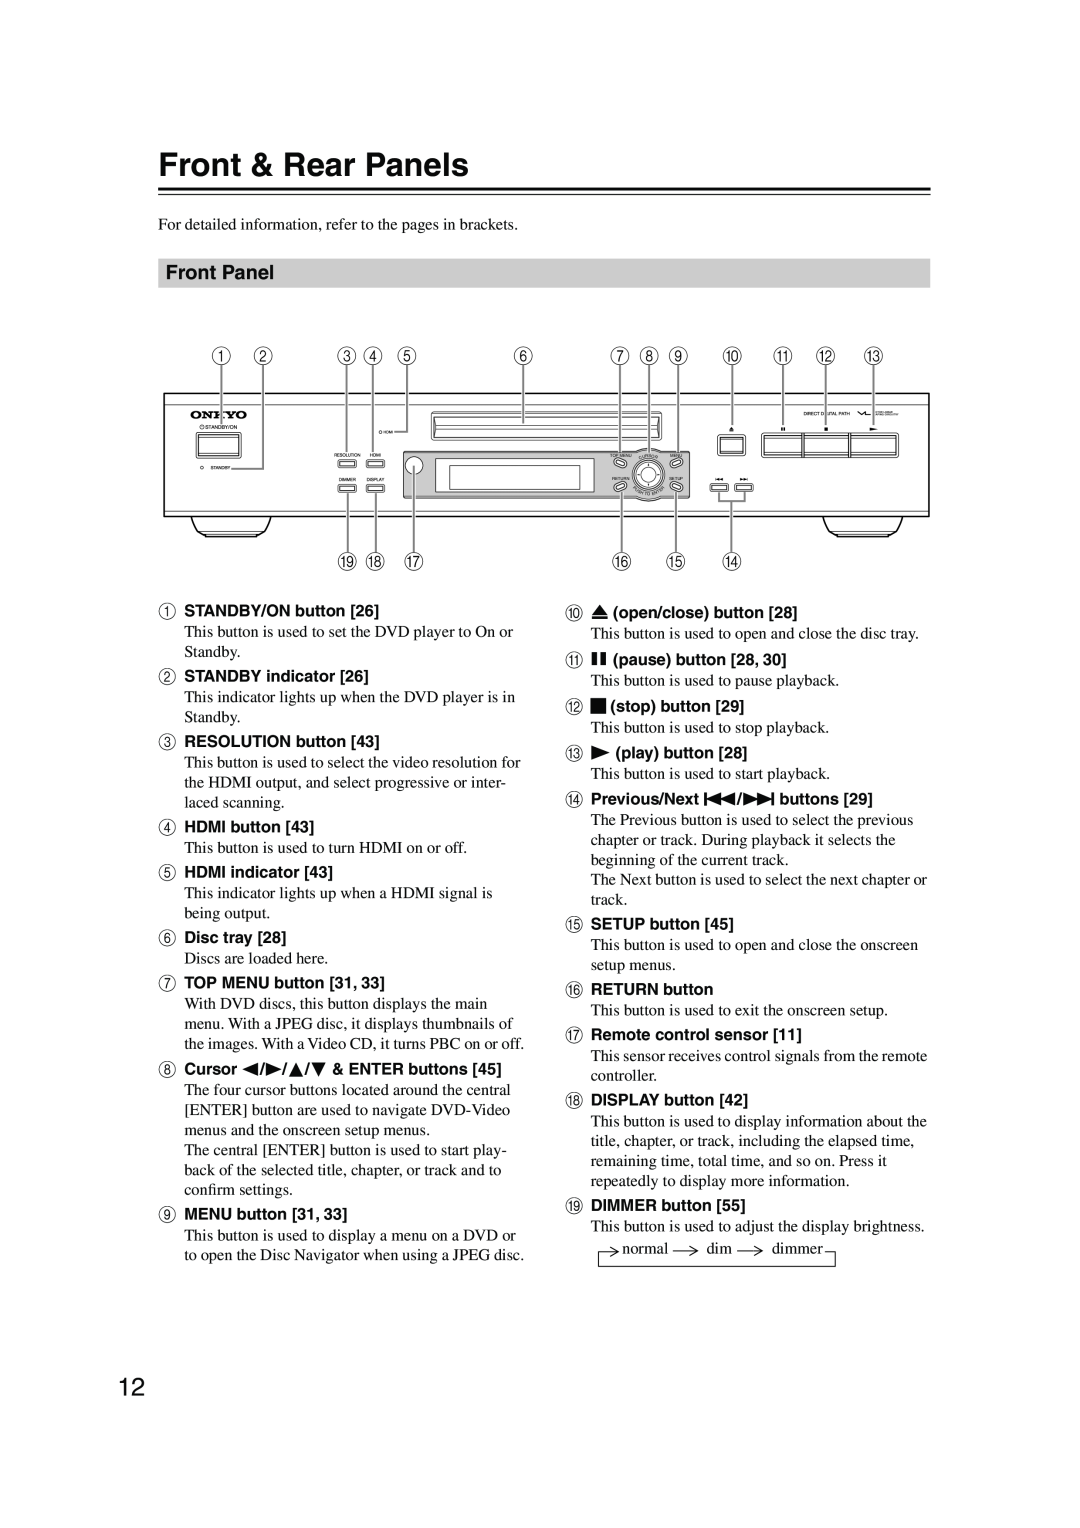 Onkyo DV-SP504E instruction manual Front & Rear Panels, Front Panel, 7 8 9 J K L M, S R Q P O N 